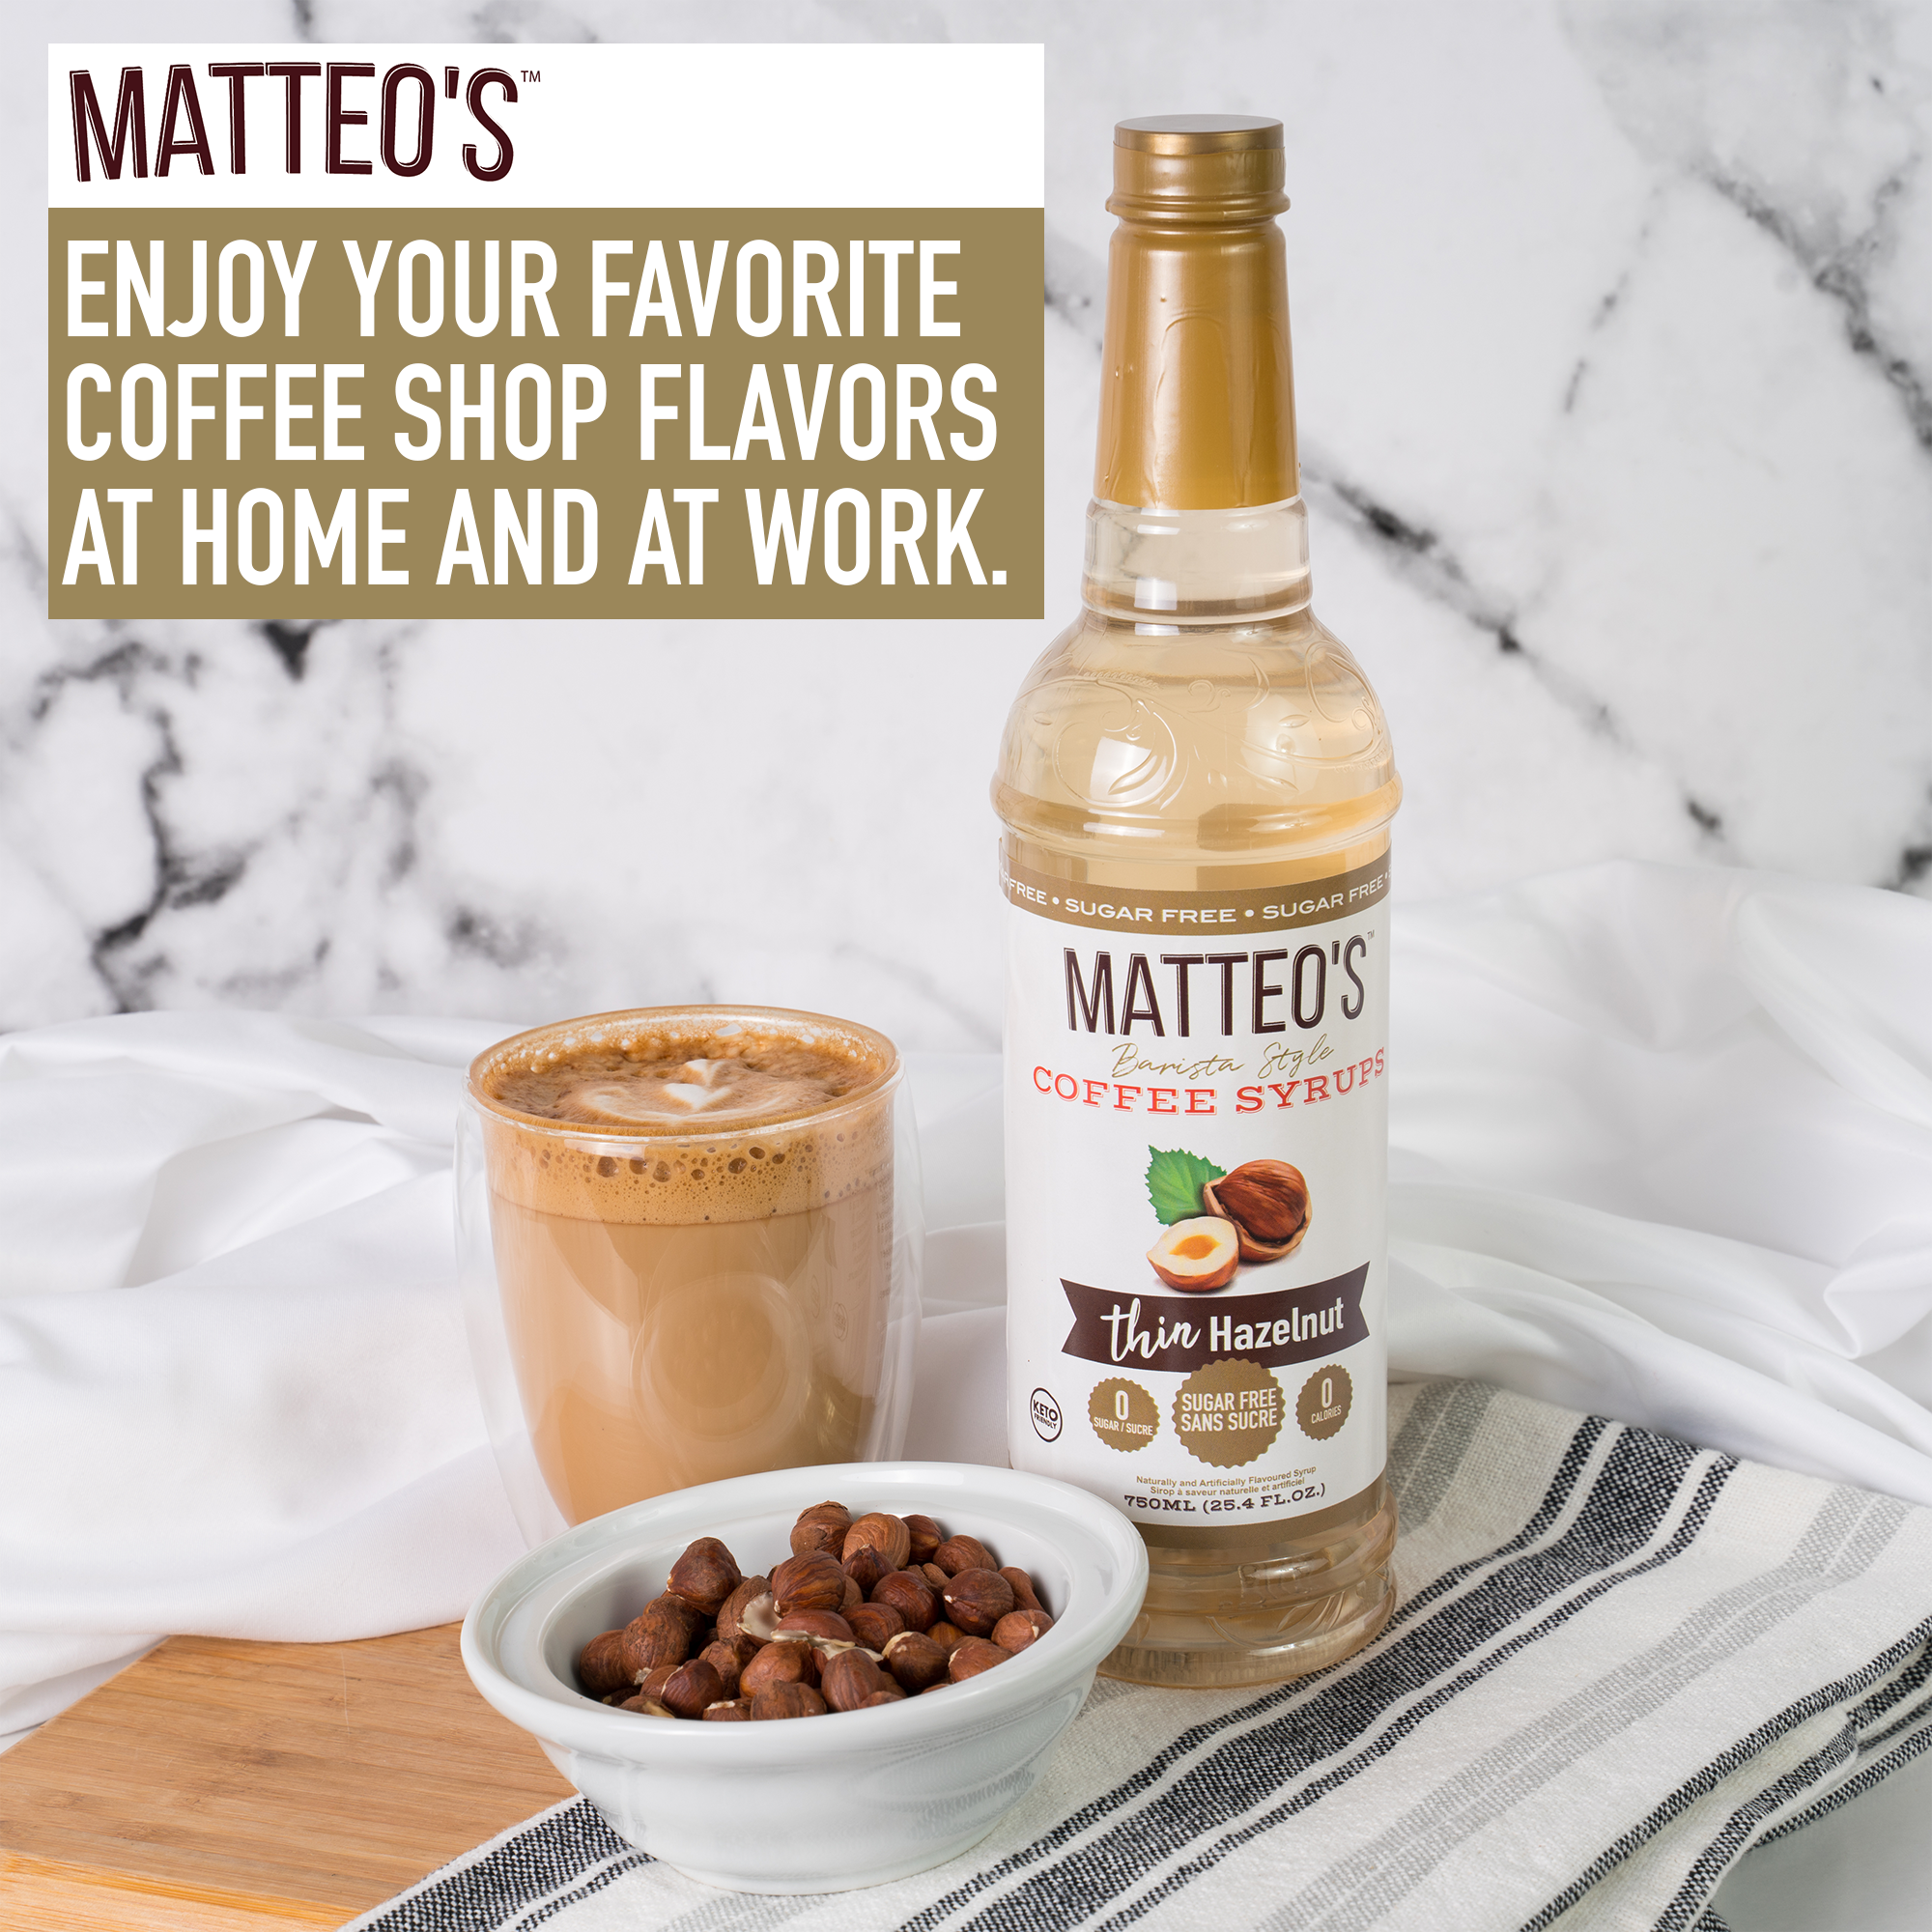 Sirop de café sans sucre, vanille - Matteo's Coffee Syrup